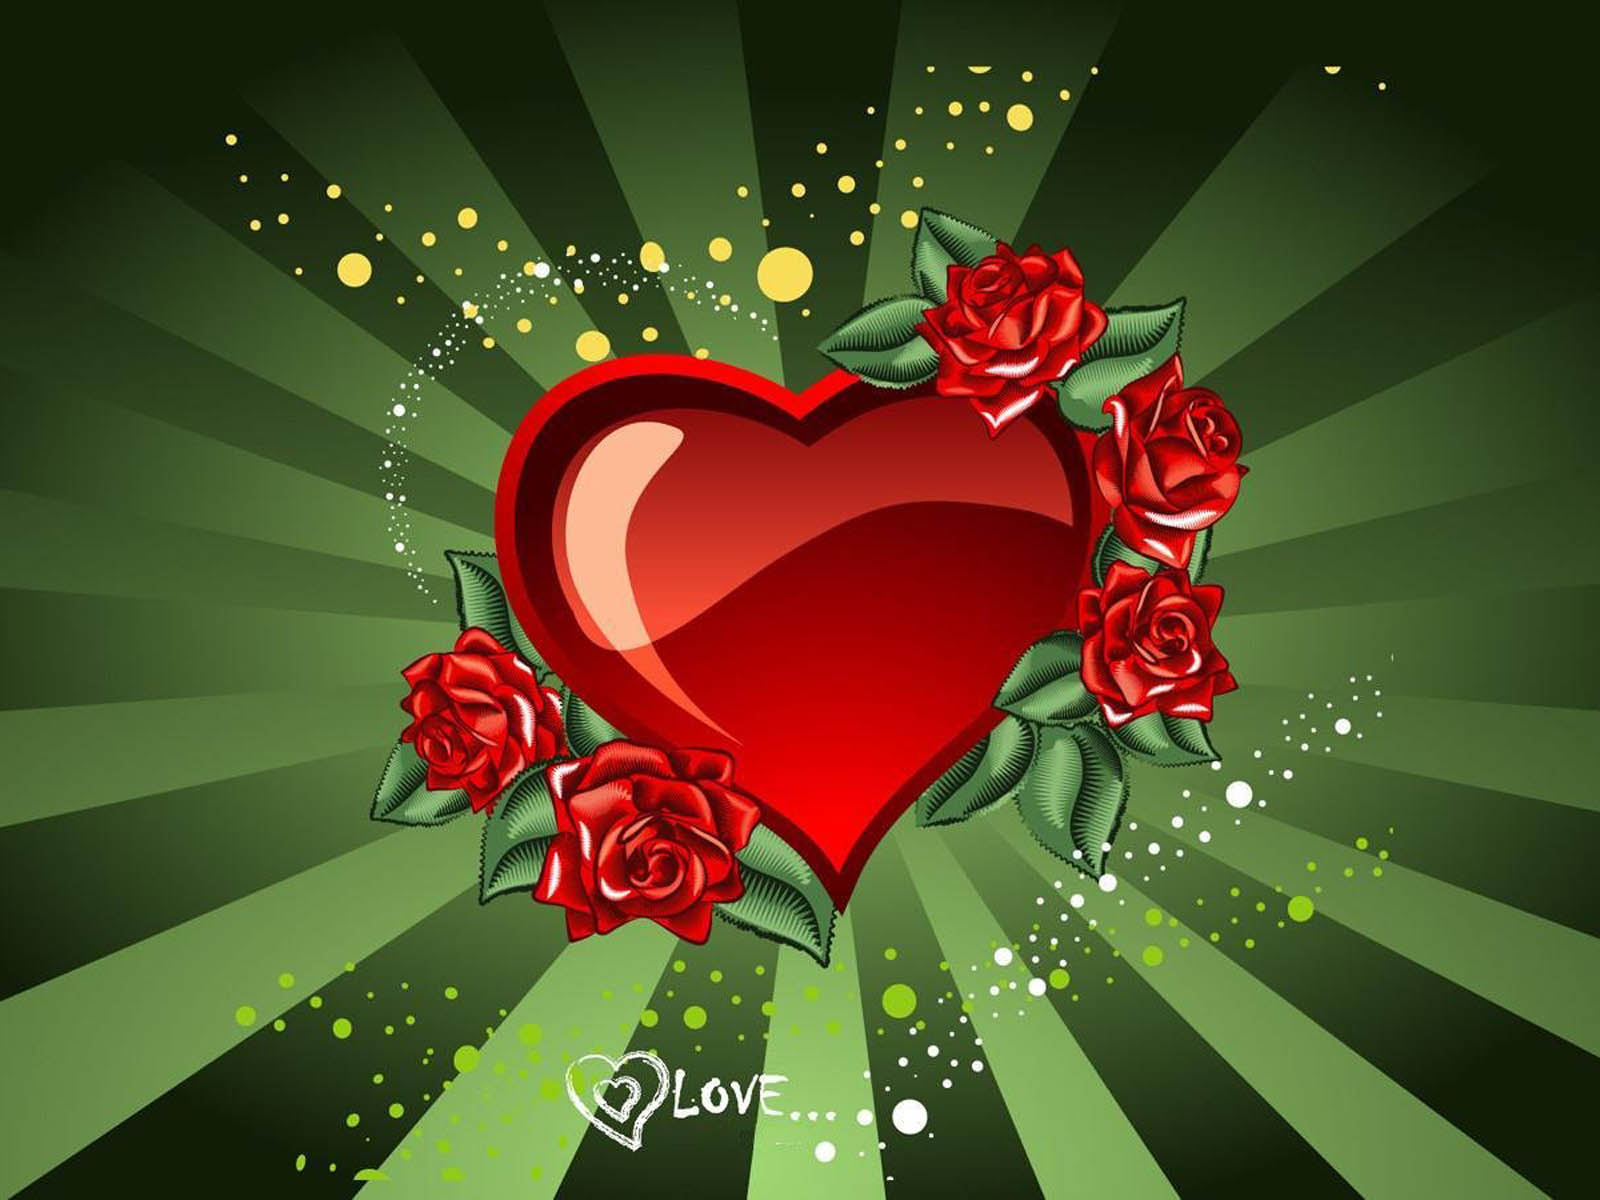 https://blogger.googleusercontent.com/img/b/R29vZ2xl/AVvXsEjxy7CCBQX0Dgw1XCHBoASAXHNbzKaUPc8FyhNxcqDBAq5BLTP5G6epAiuciyh8aKAil2oSBXHYS2GqHqpNWcePIrXsZvX22OvtVTwFSFWnmDObLVO_xbAHQsoZV-_yCZ7U3Qw-5Q_6c8Y/s1600/I+love+you+Heart+Picture+(7).jpg